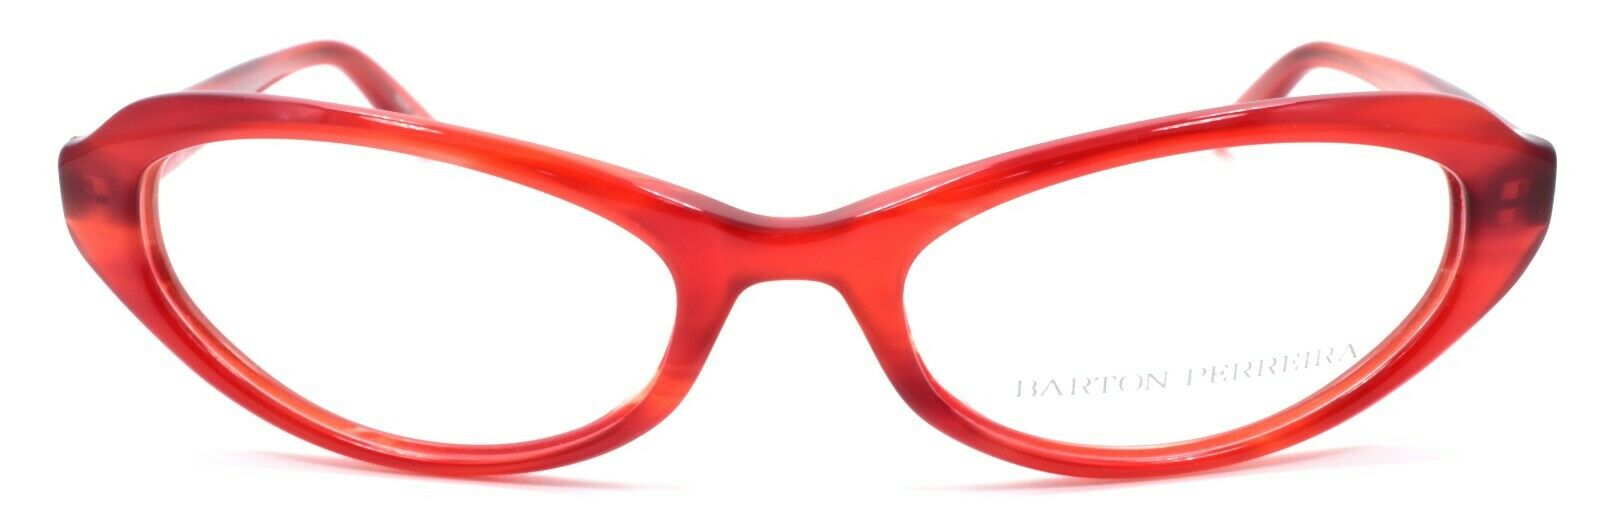 2-Barton Perreira Lolita Women's Eyeglasses Frames Cat Eye 52-18-133 Scarlet Red-672263038764-IKSpecs